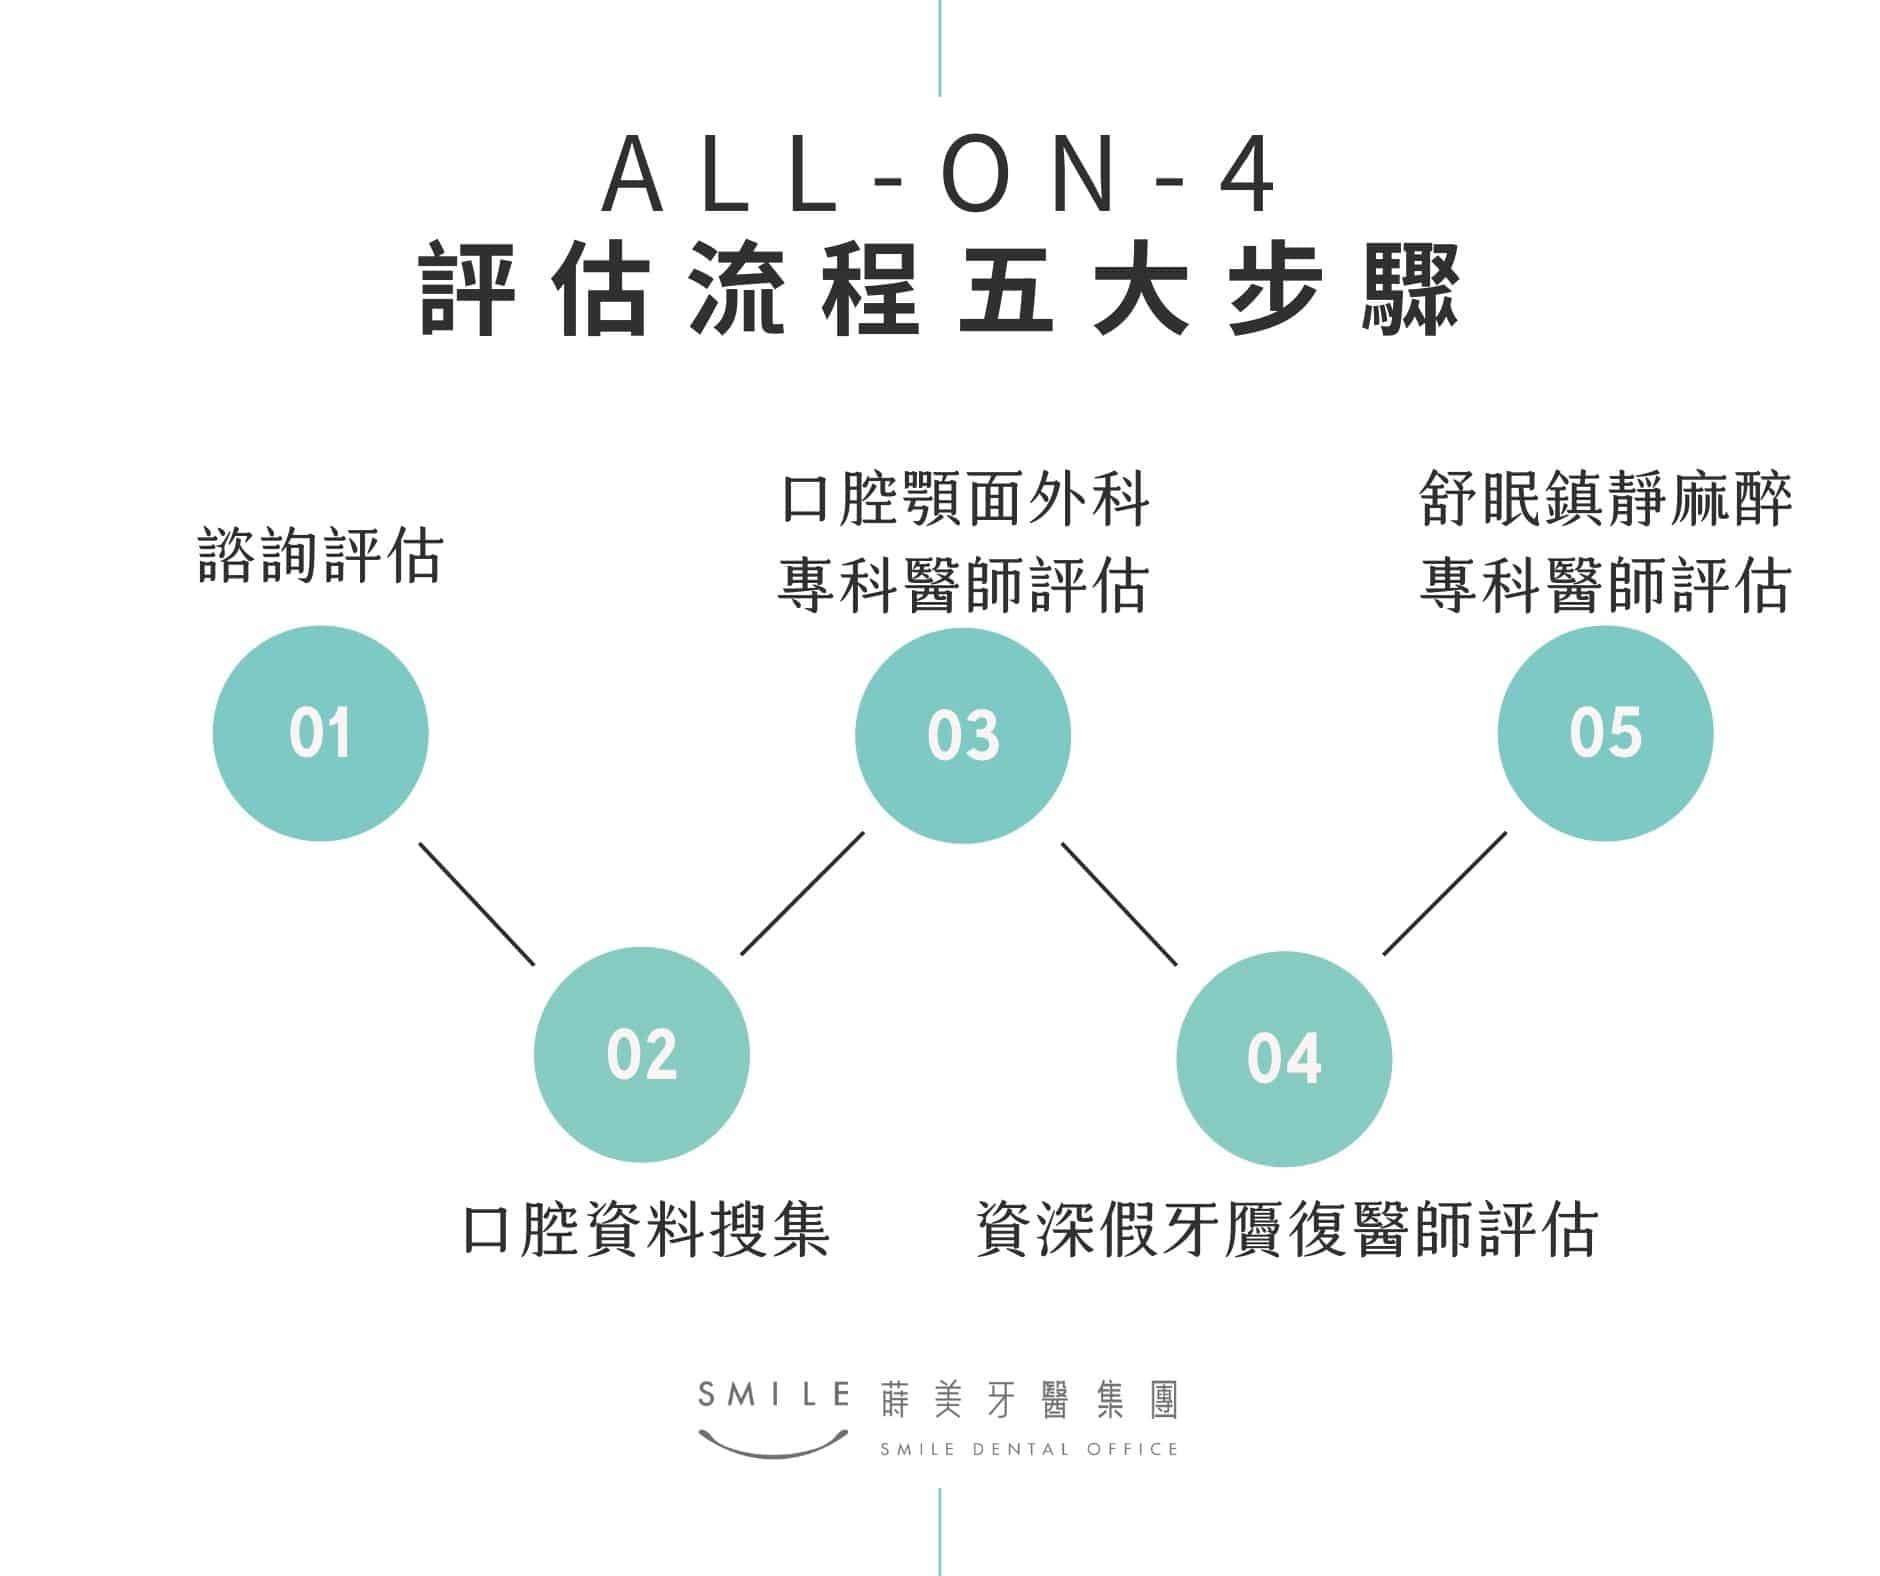 All-on-4 評估流程五大步驟